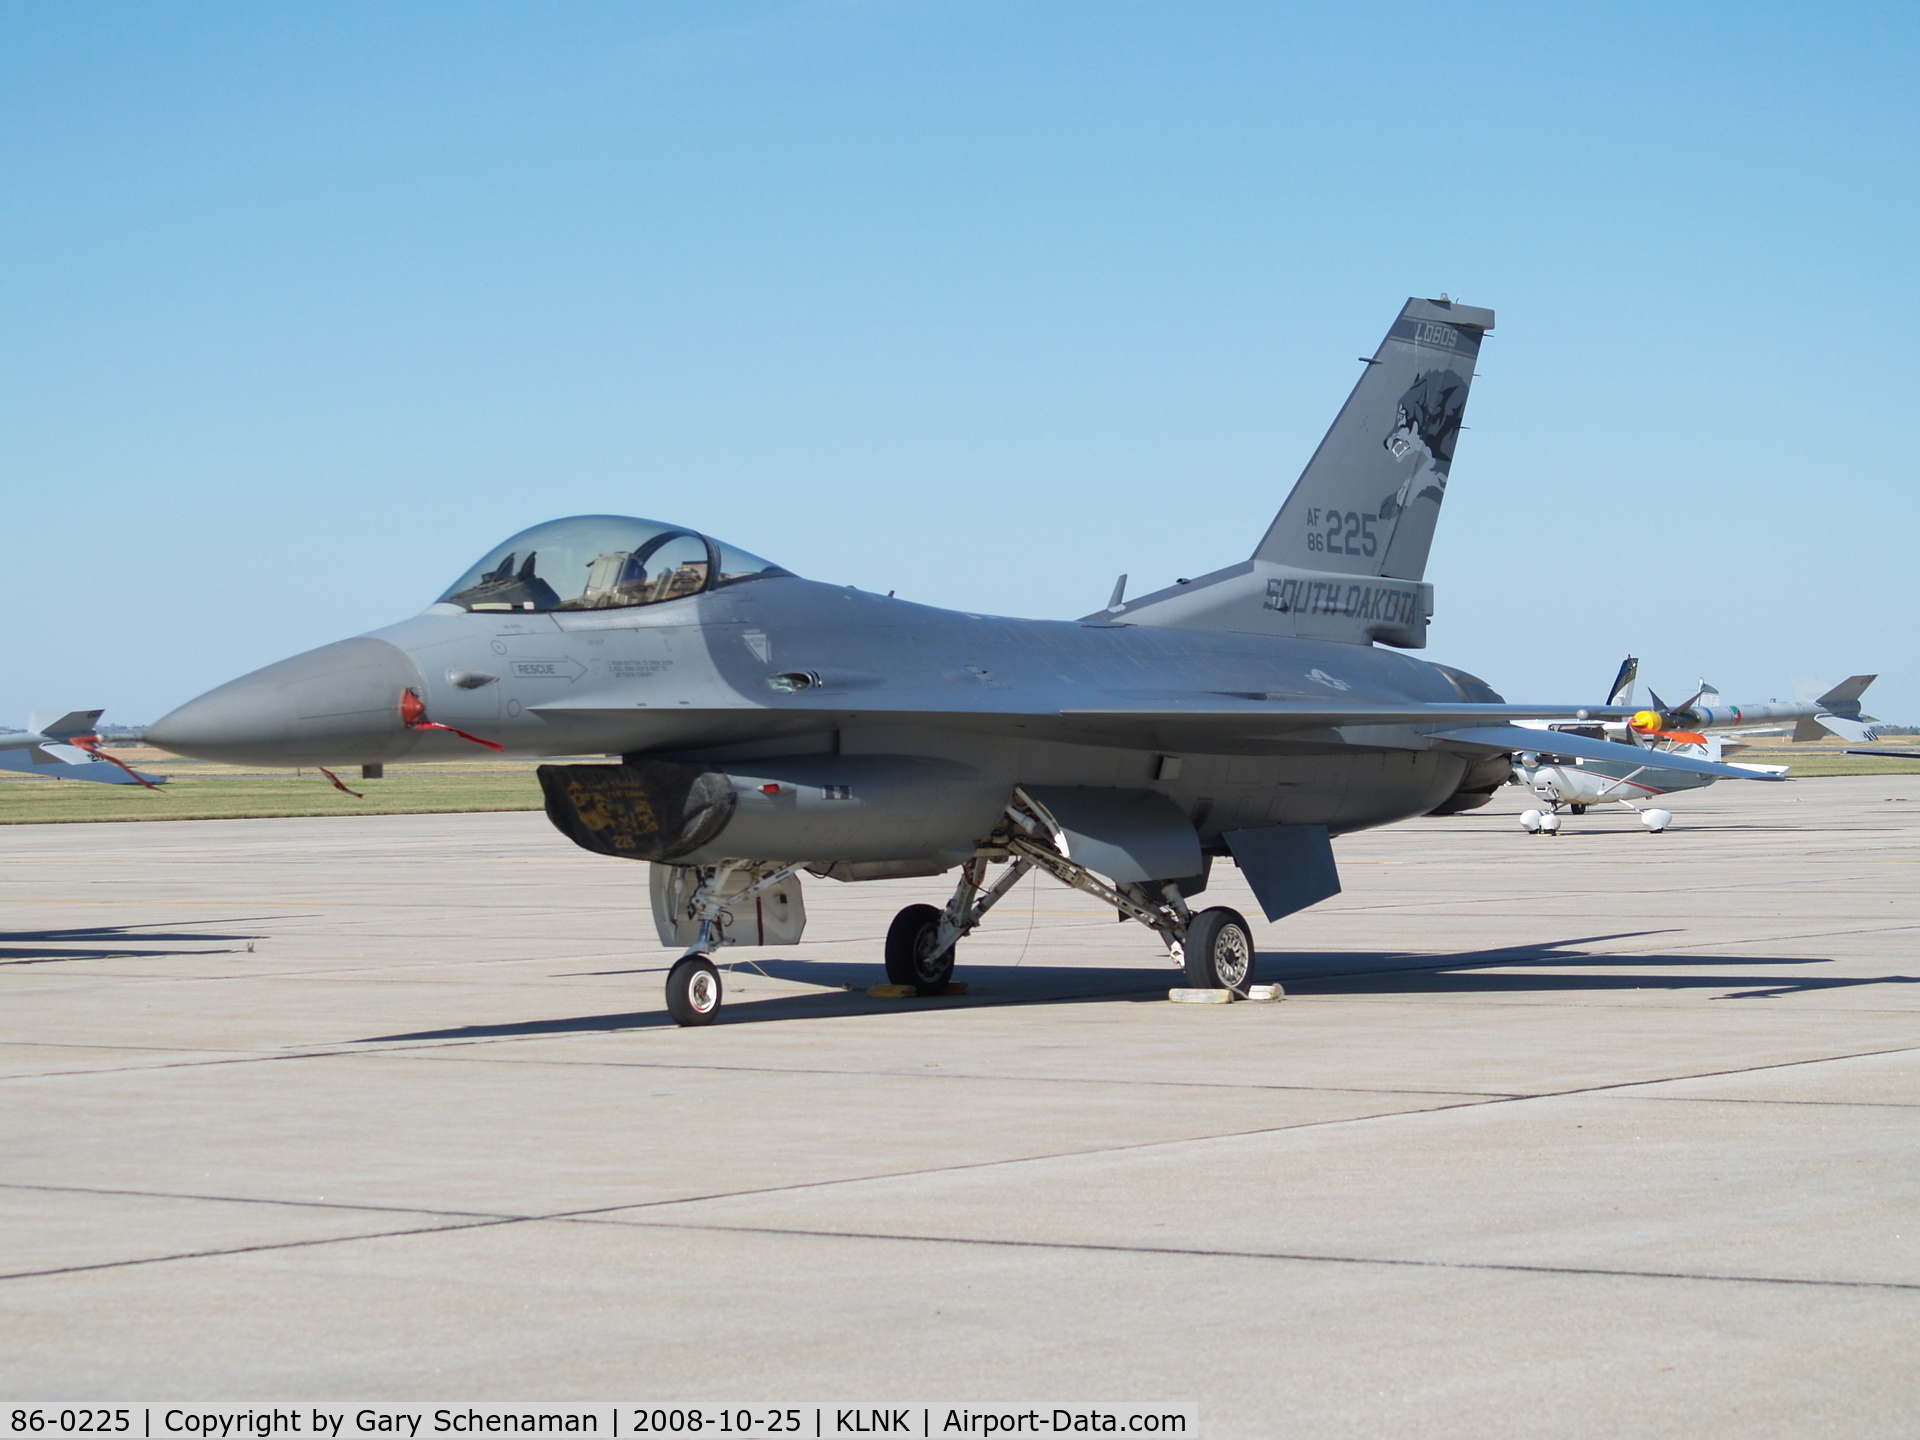 86-0225, 1986 General Dynamics F-16C Fighting Falcon C/N 5C-331, F-16 FIGHTING FALCON FROM SOUTH DAKOTA